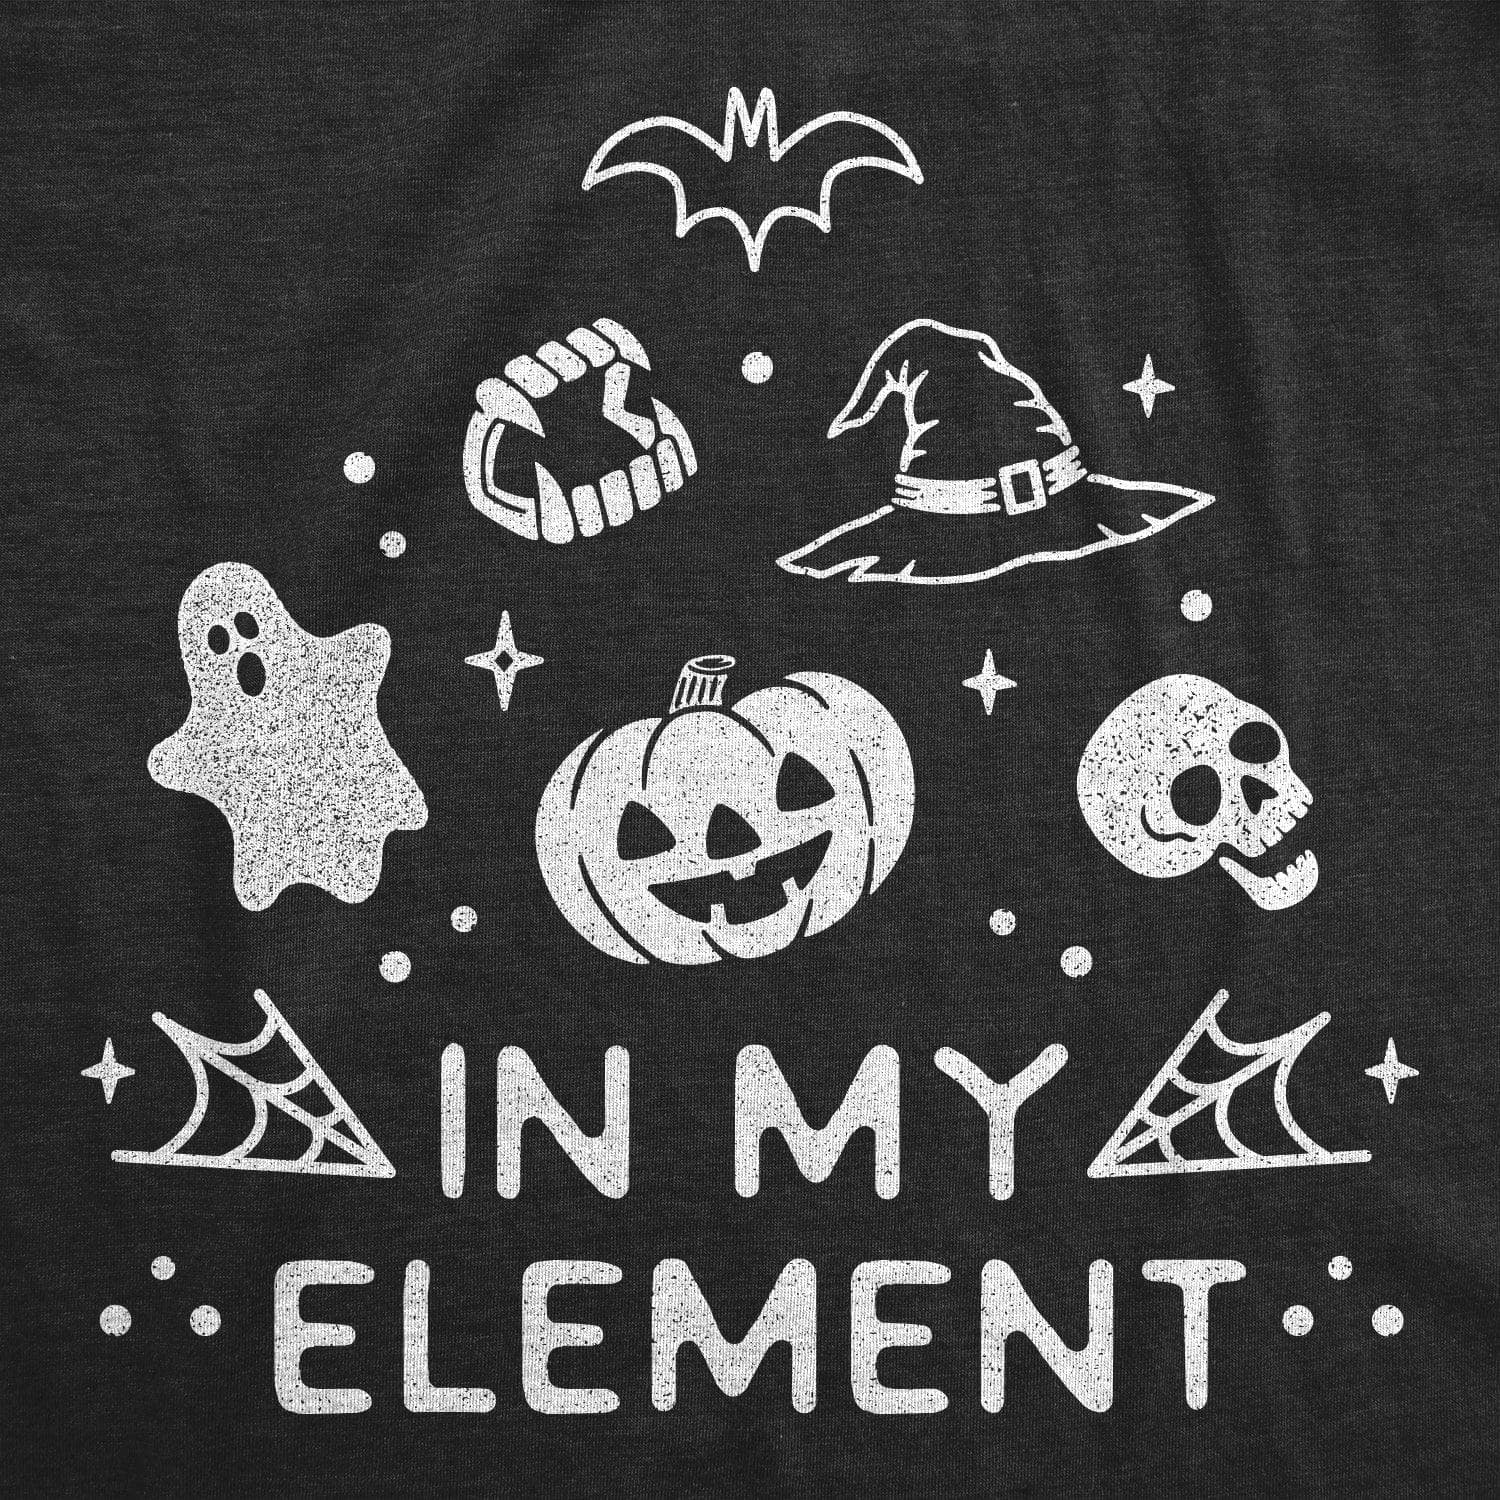 In My Element Halloween Women's Tshirt  -  Crazy Dog T-Shirts